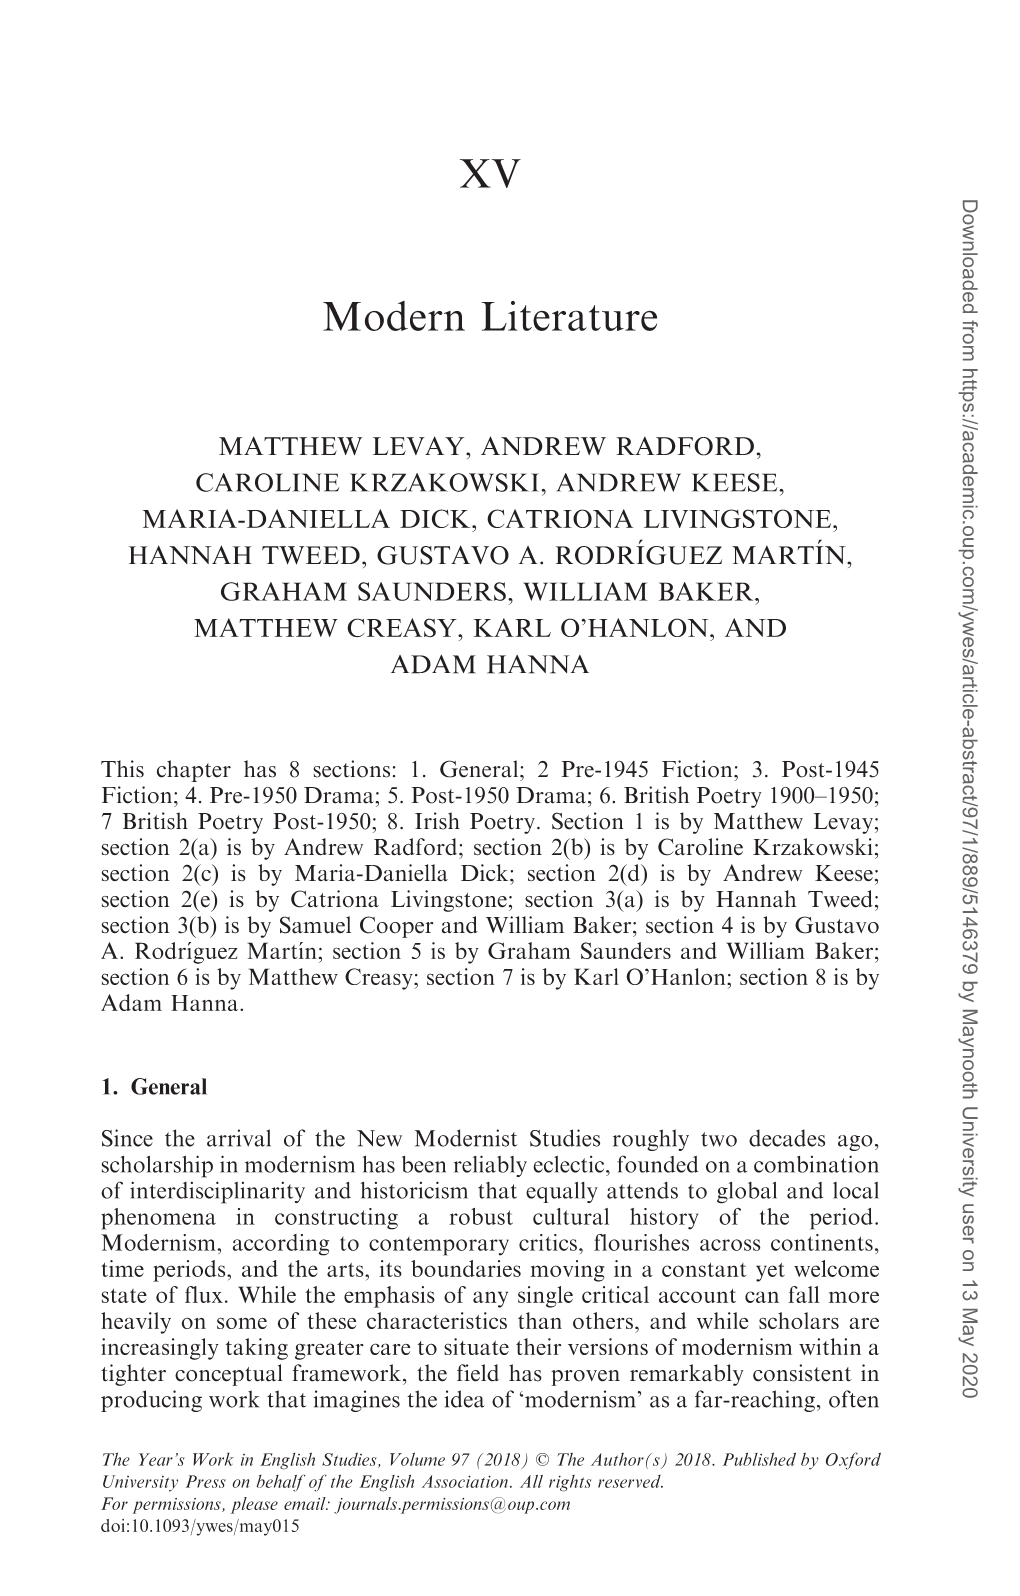 XV Modern Literature